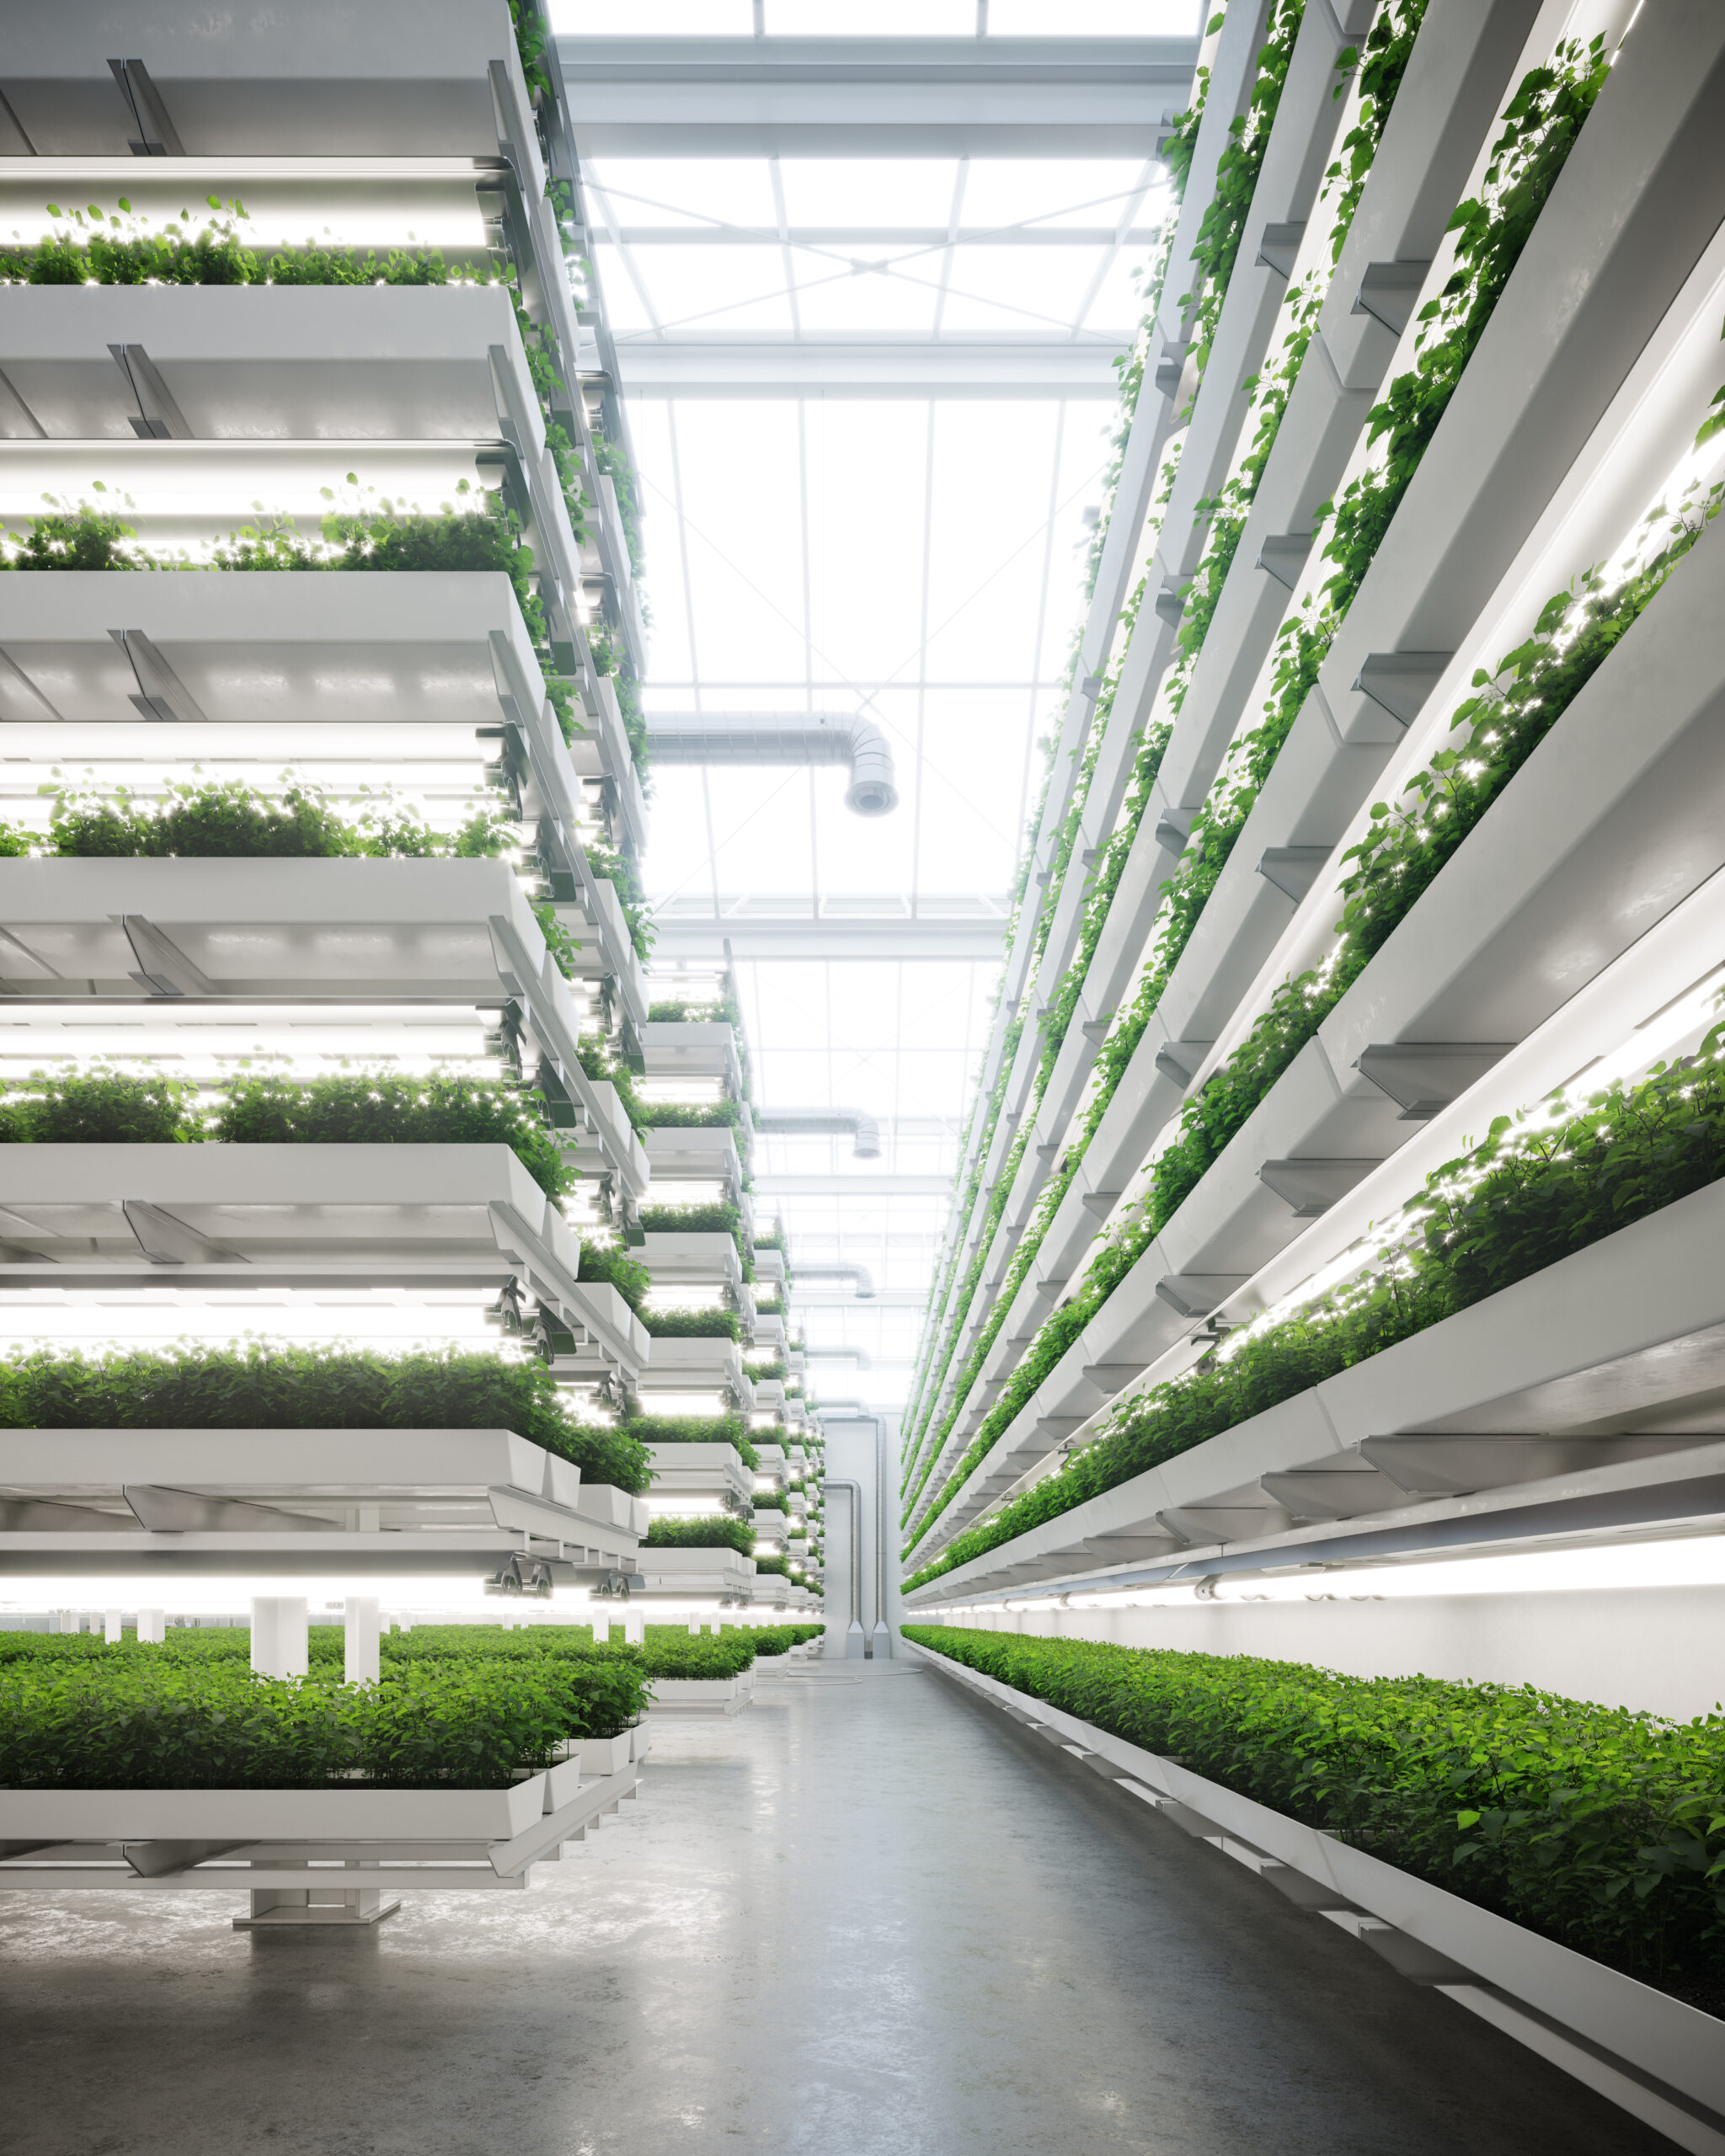 Vertical farm generated digitally inside a greenhouse